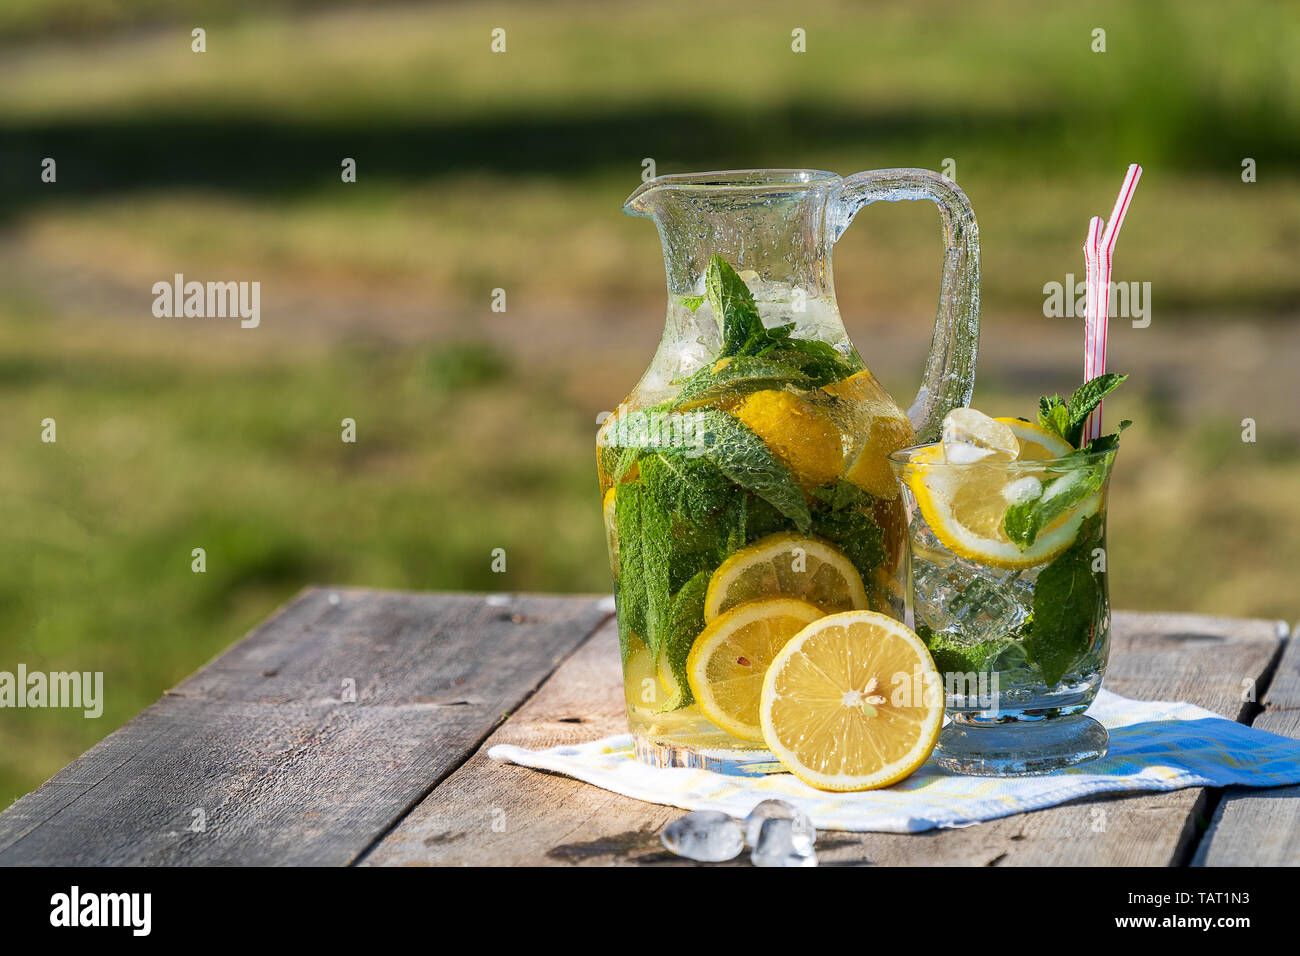 Tradineur - Jarra de cristal para servir agua, bebidas frías, limonada, té  helado, zumo, transparente, resistente, frigorífico